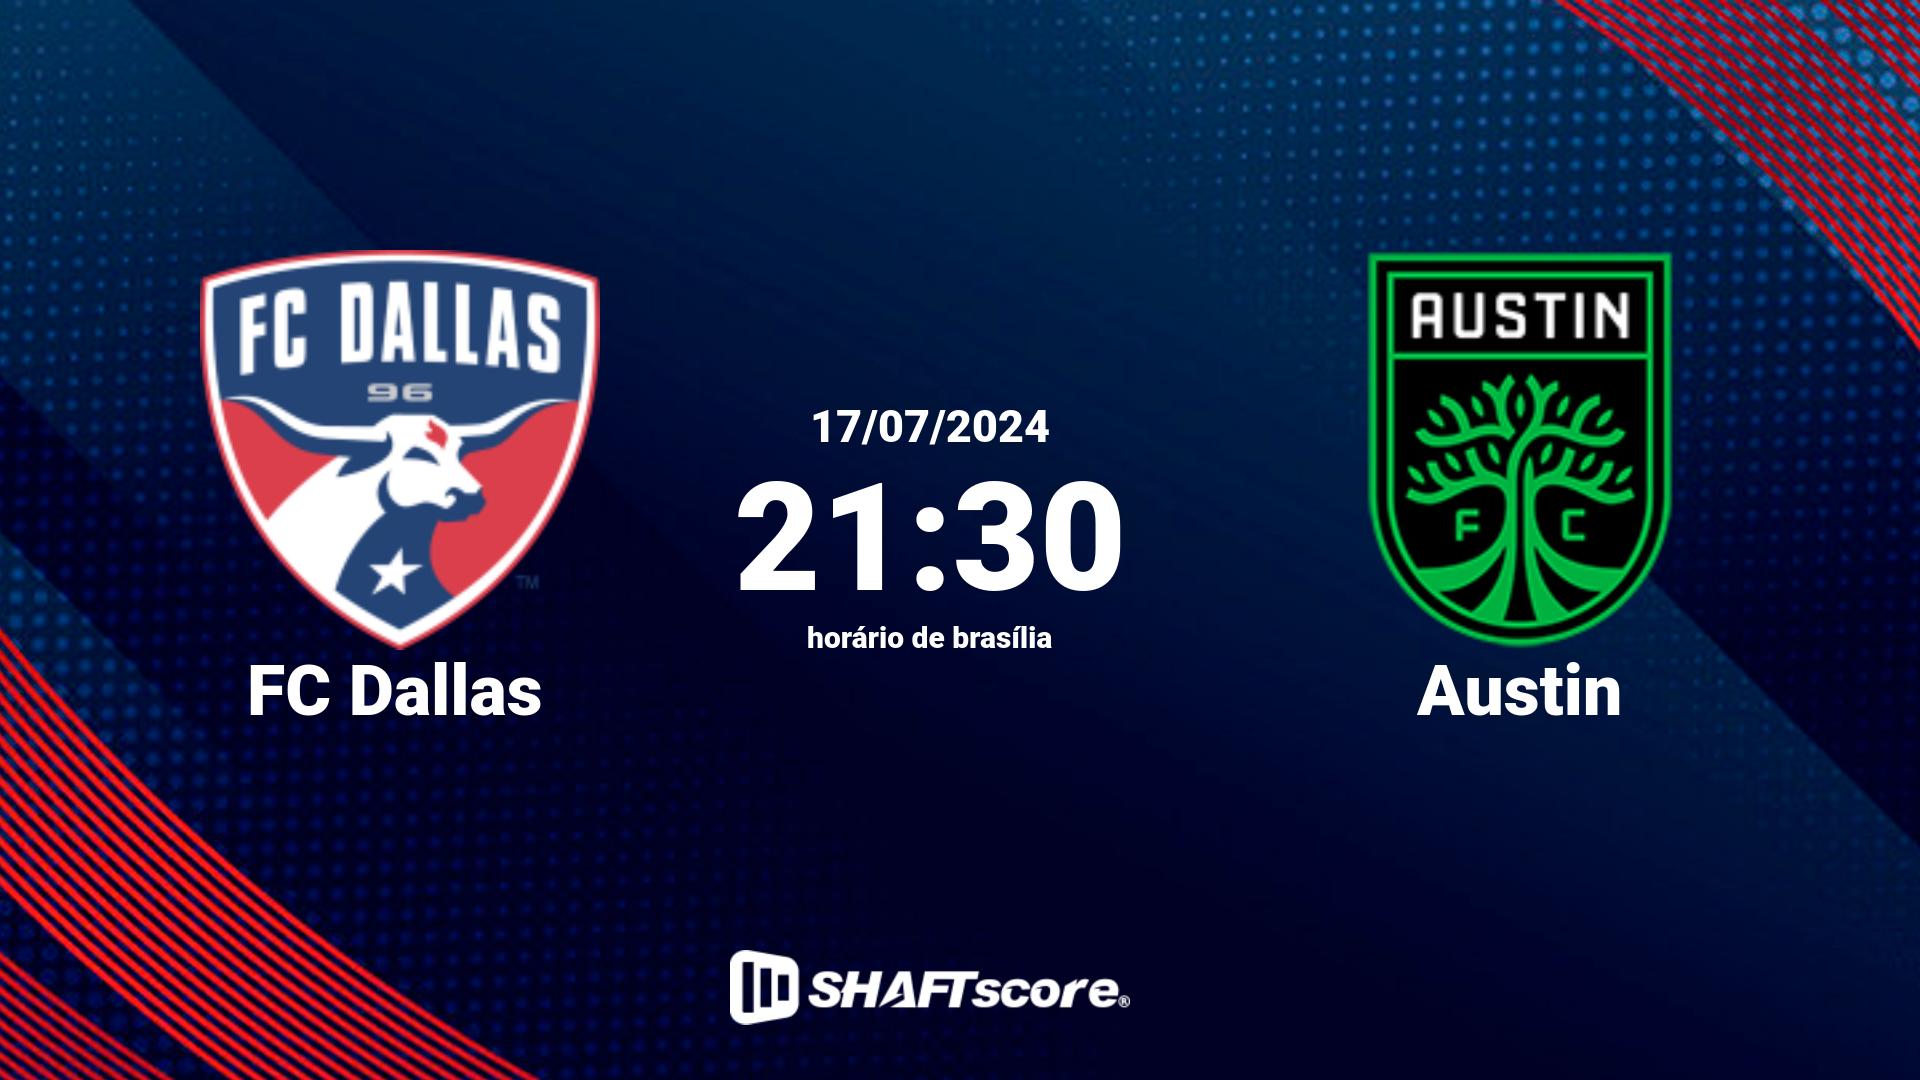 Estatísticas do jogo FC Dallas vs Austin 17.07 21:30